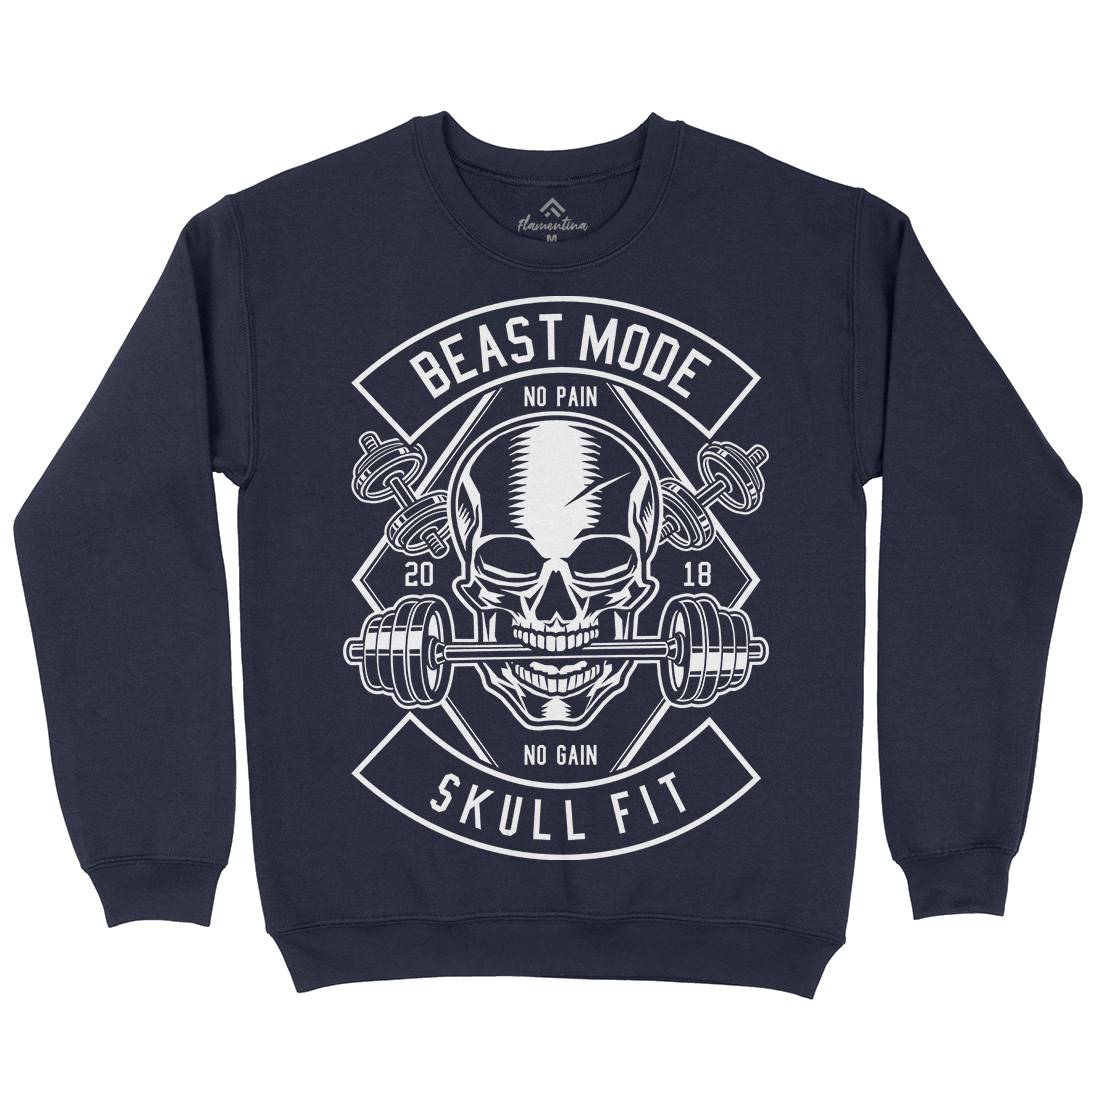 Skull Fit Kids Crew Neck Sweatshirt Gym B628